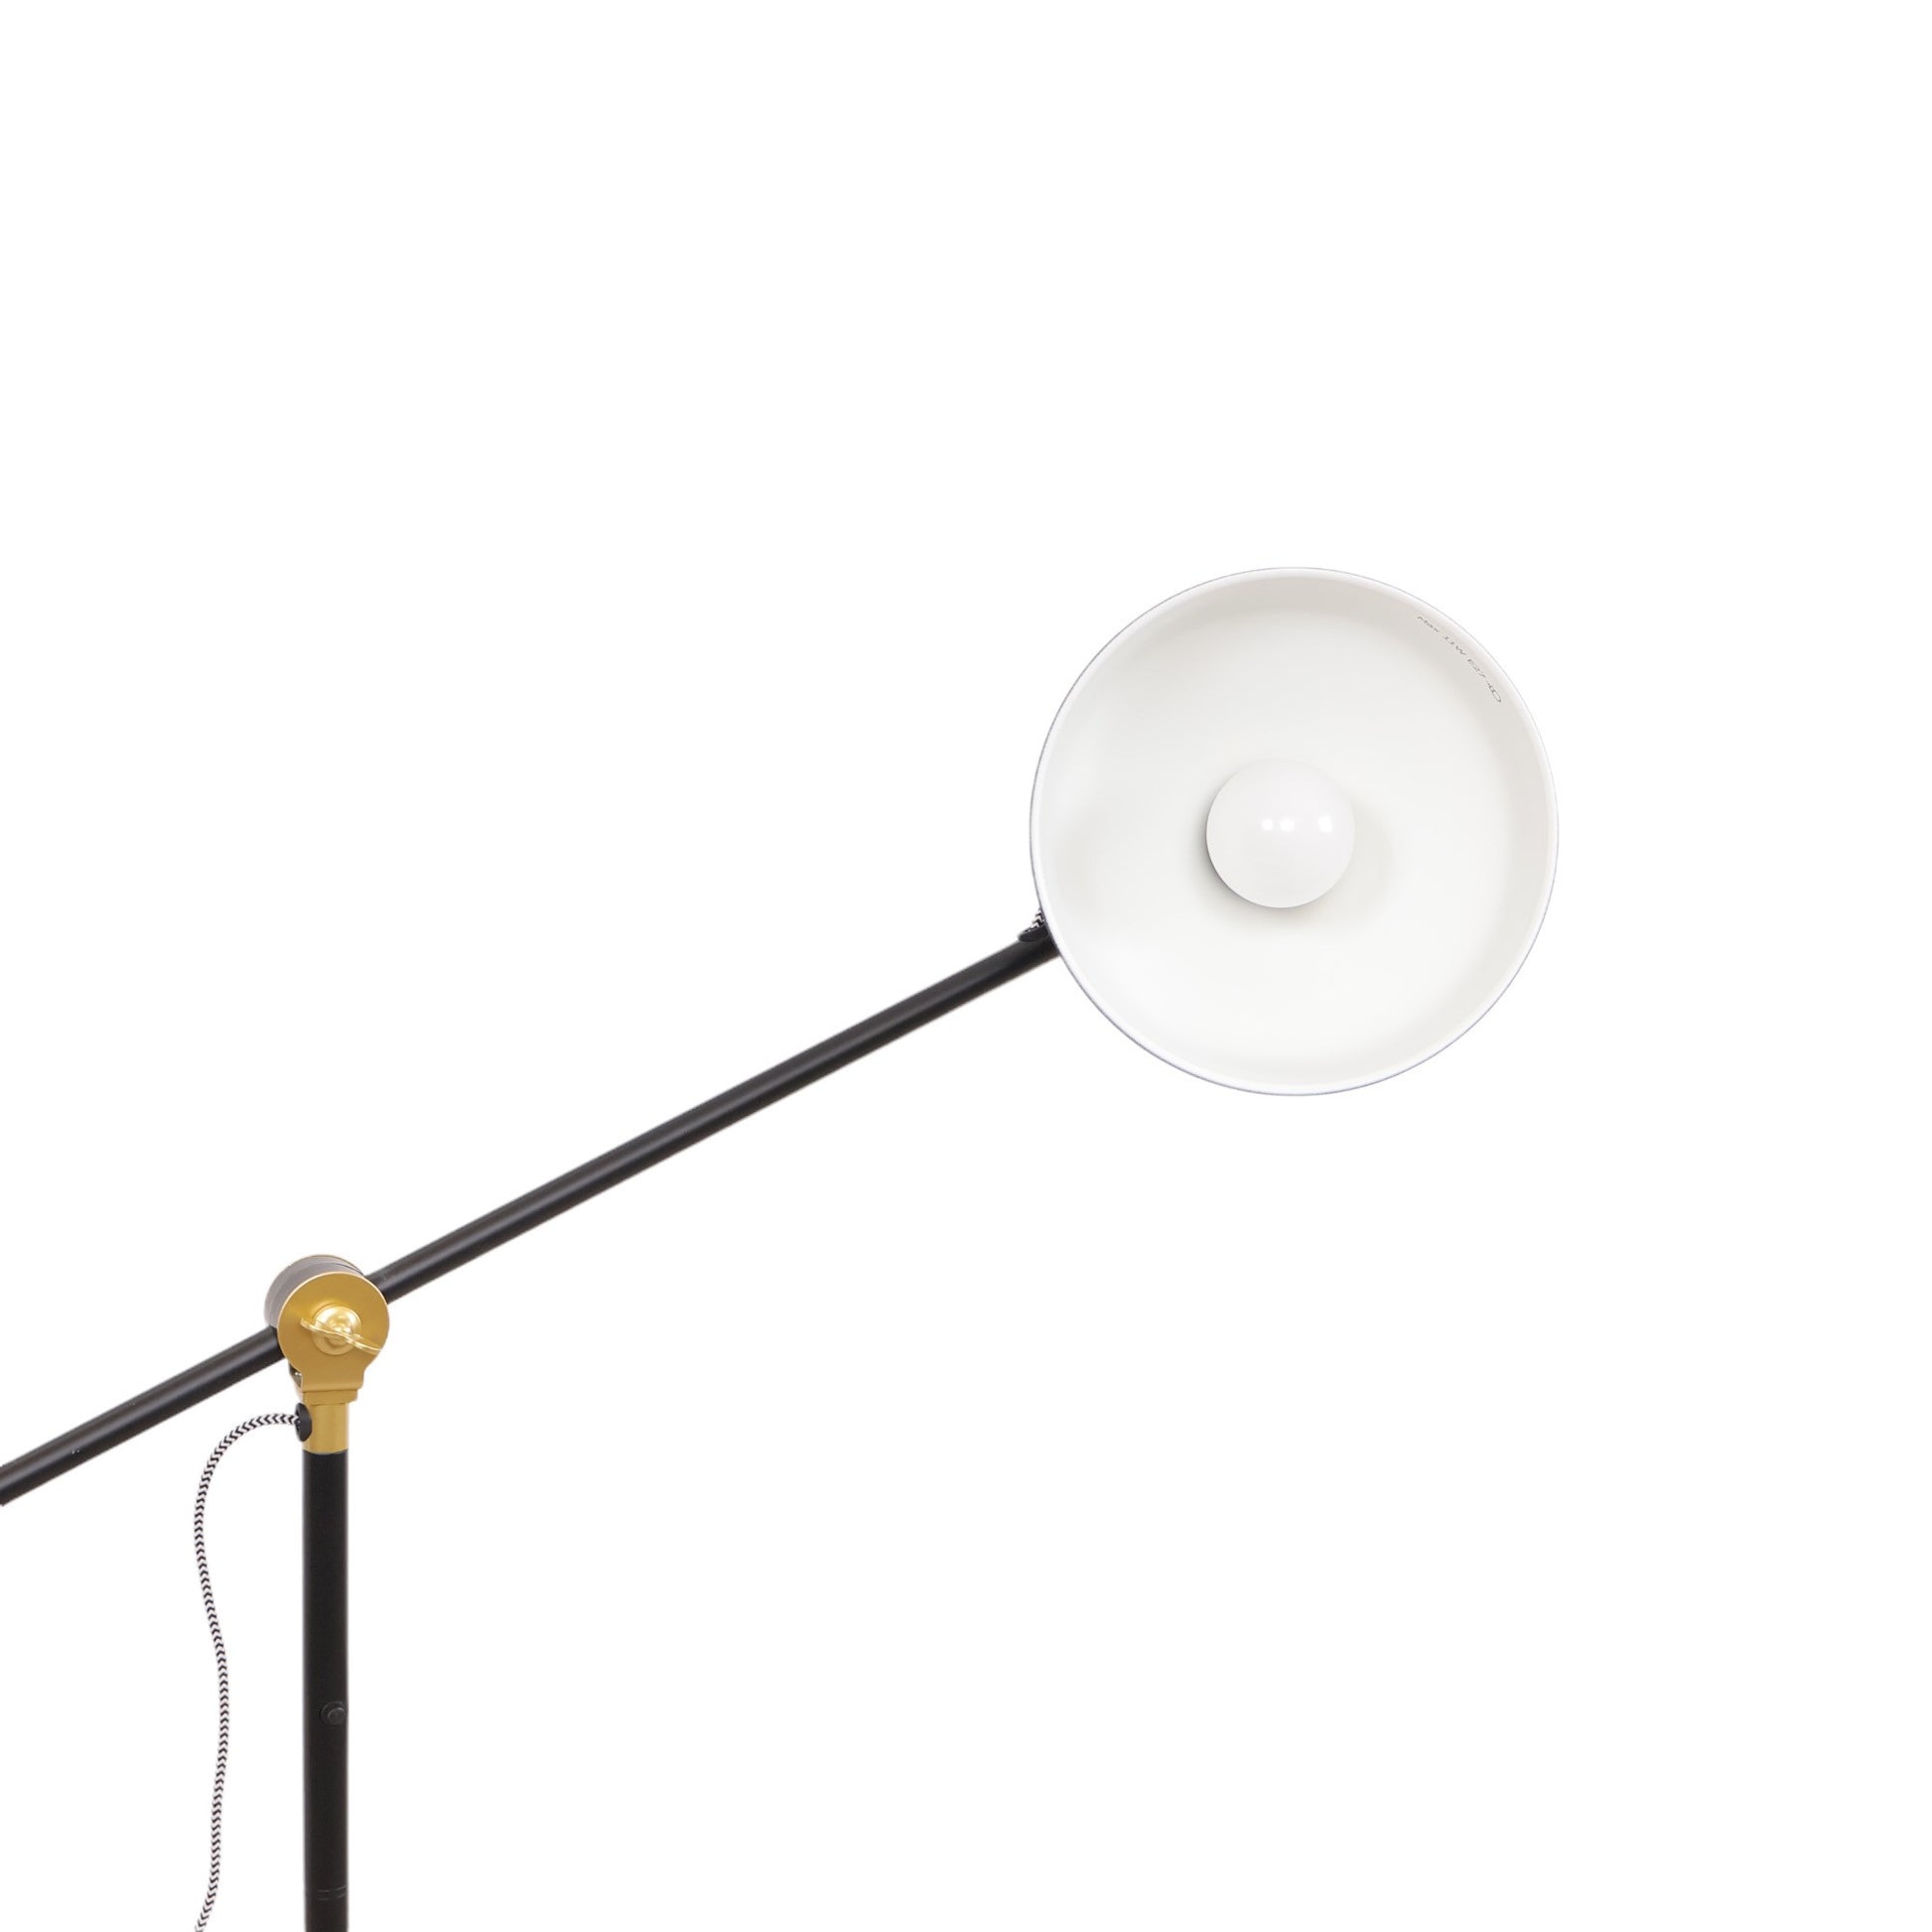 Elegant IKEA stålampe